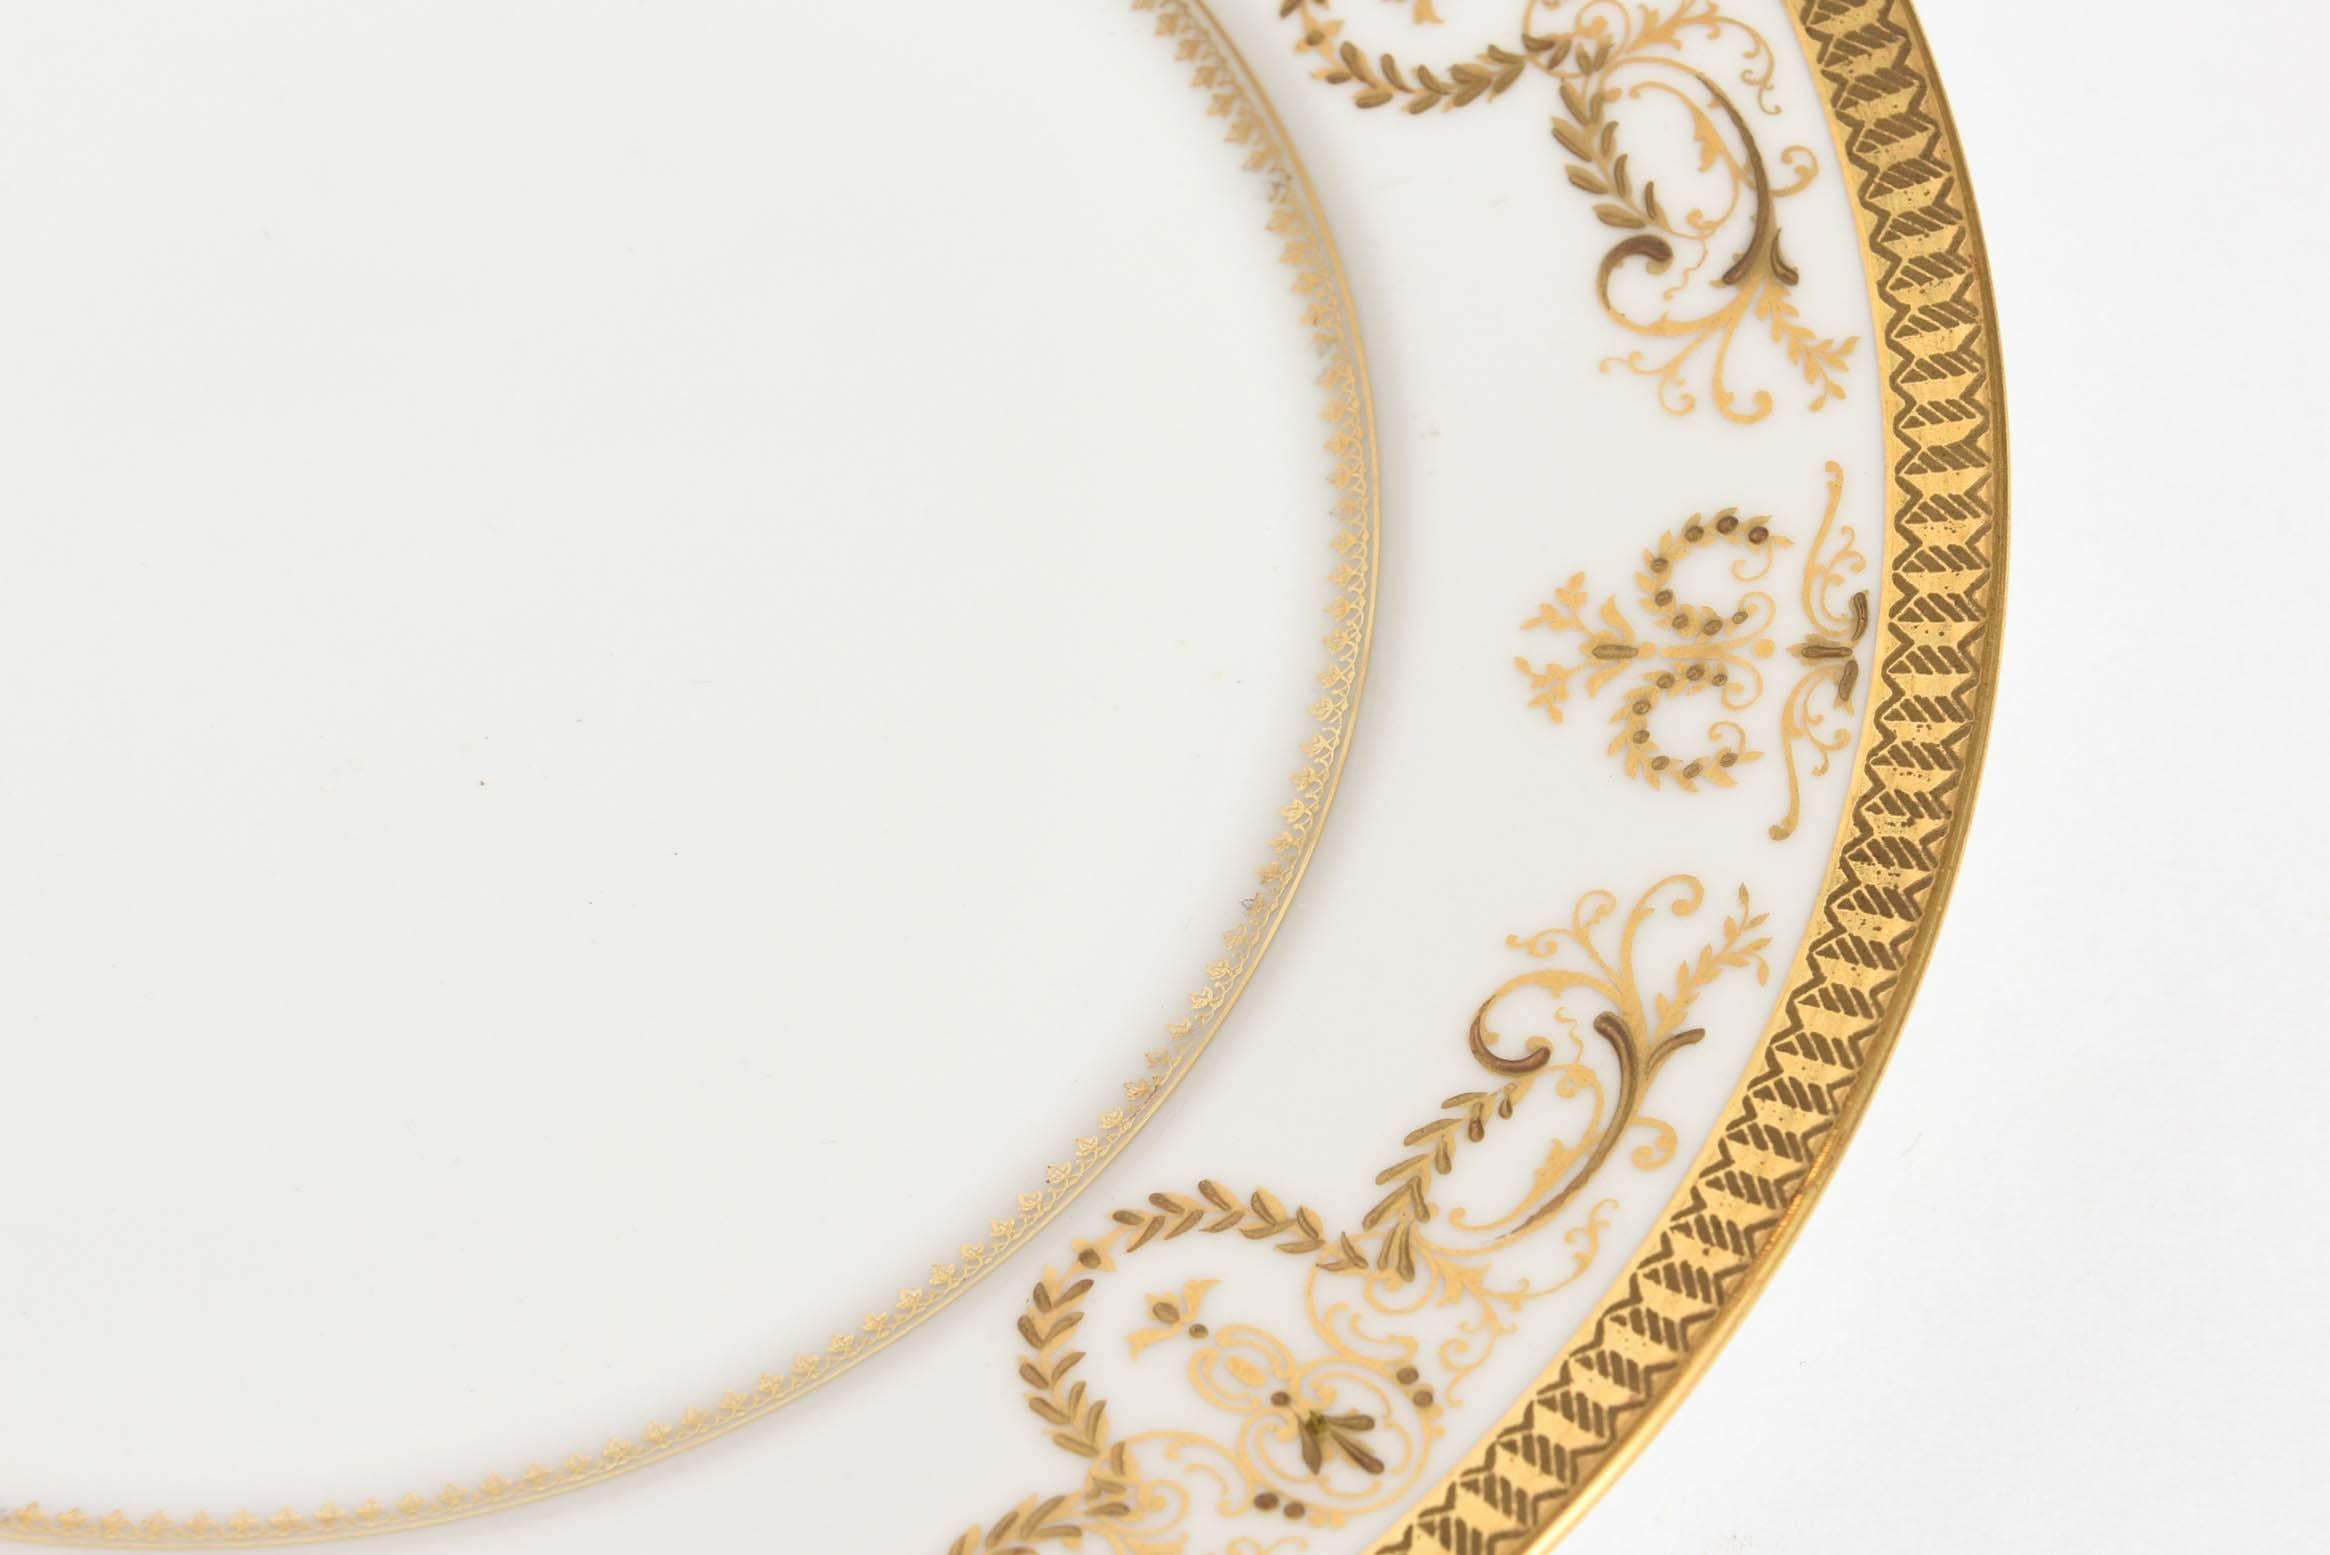 antique plates with gold trim